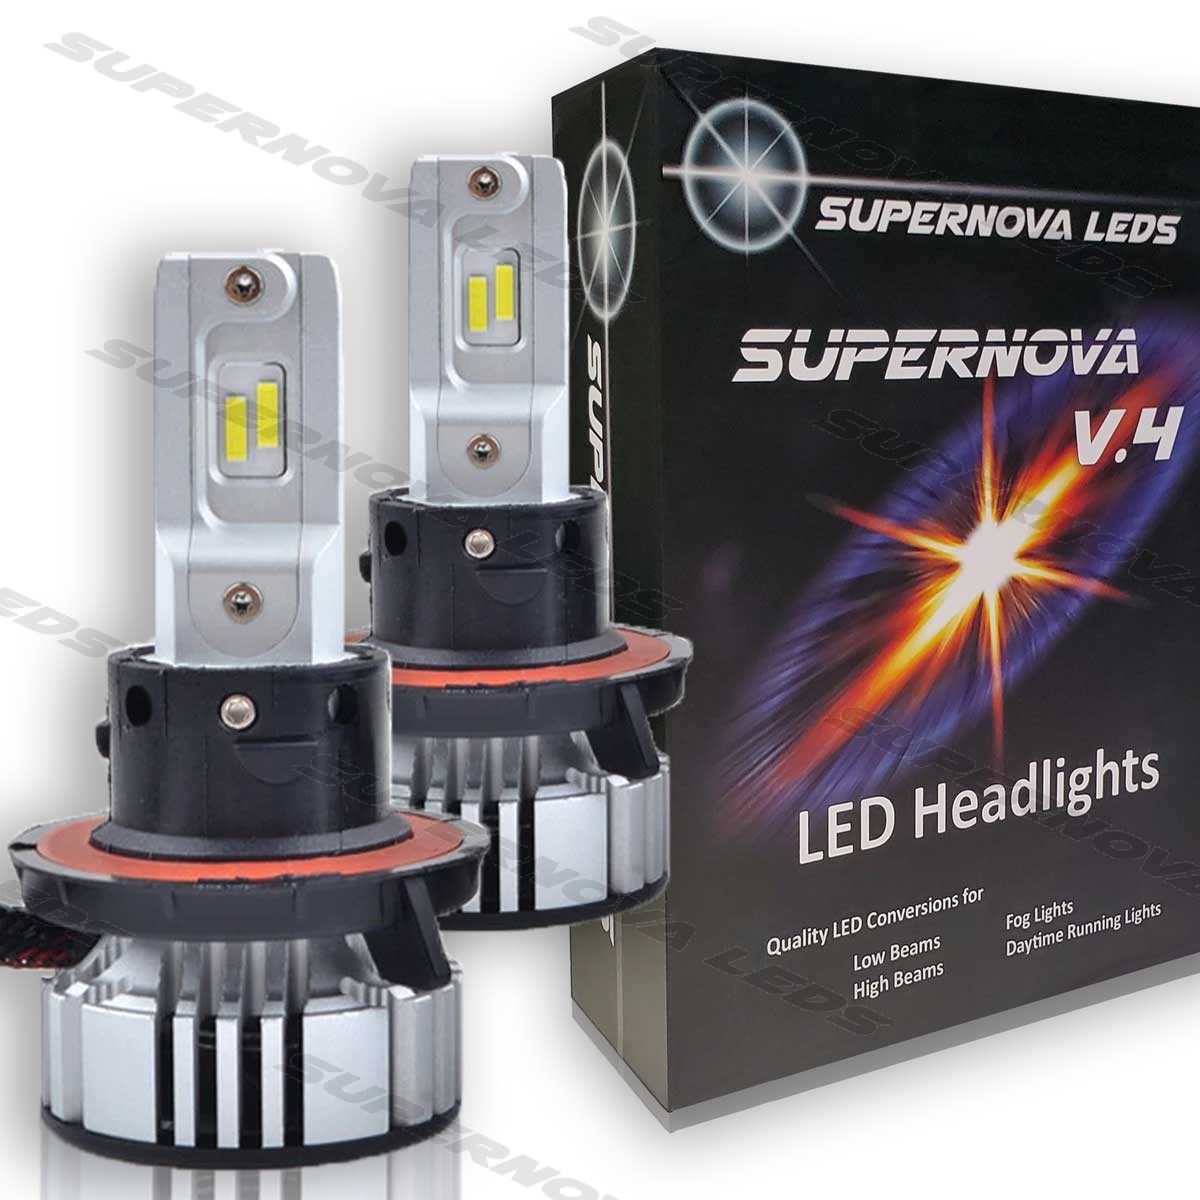 Supernova V.4 Headlights